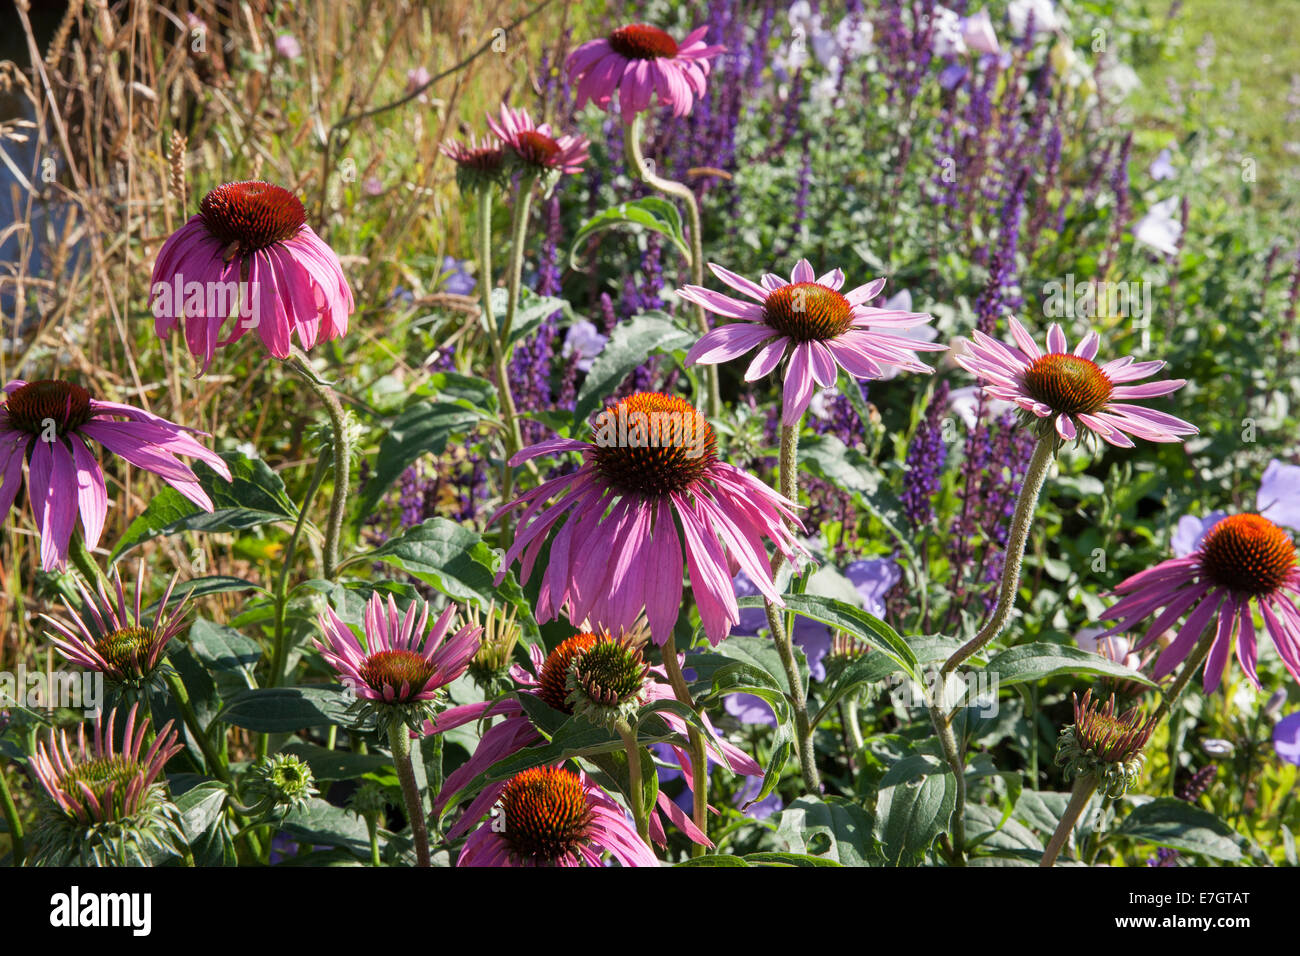 Garden - Maggie's Forest Garden - Echinacea purpurea - Designers - Amanda Waring and Laura Arison - Sponsor Stock Photo